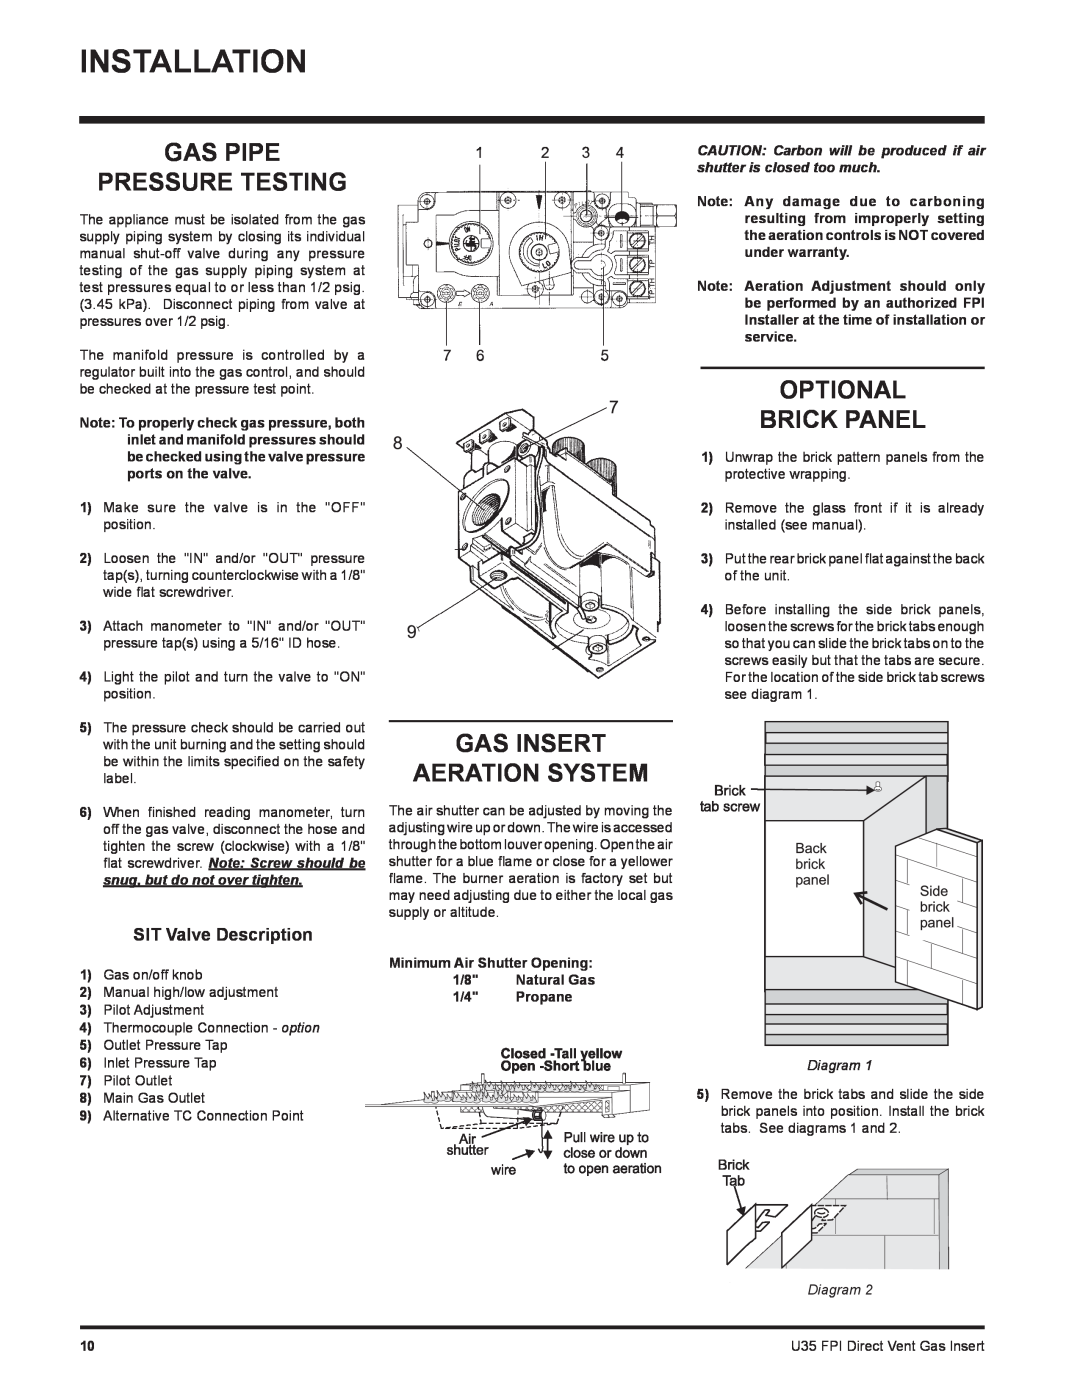 Regency U35-NG1 Gas Pipe Pressure Testing, Gas Insert Aeration System, Optional Brick Panel, SIT Valve Description 